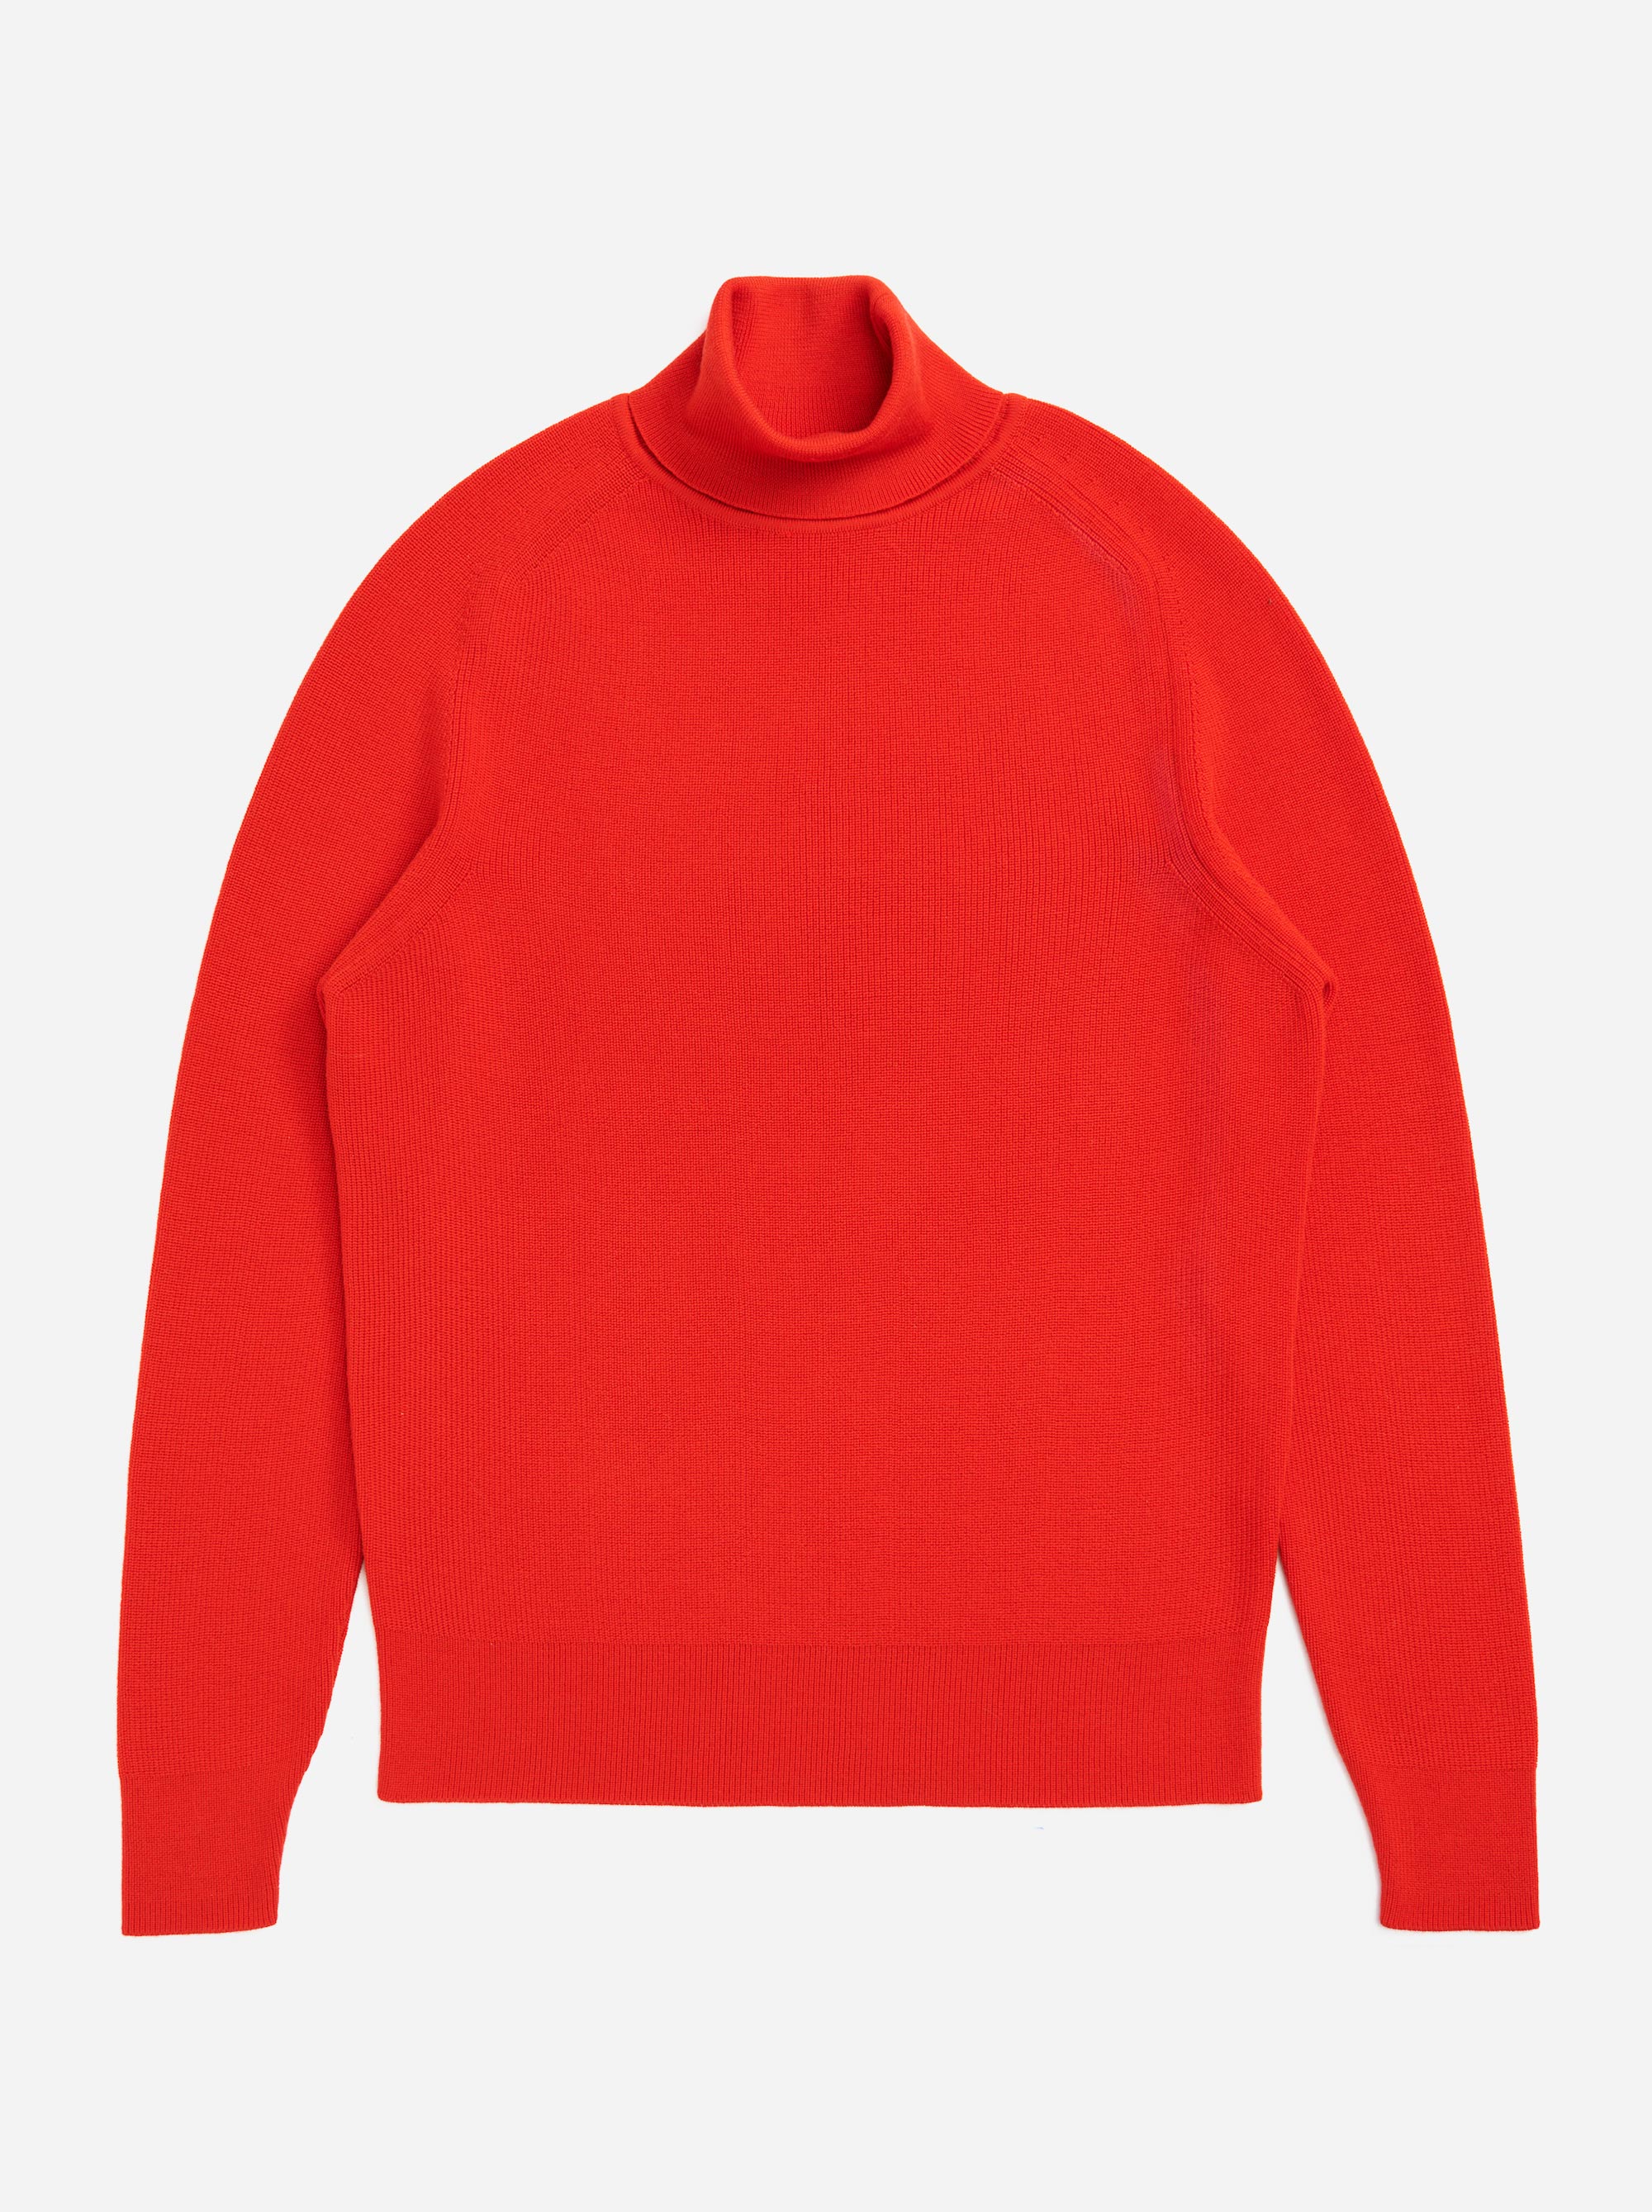 Teym - Turtleneck - The Merino Sweater - Men - Red - 4